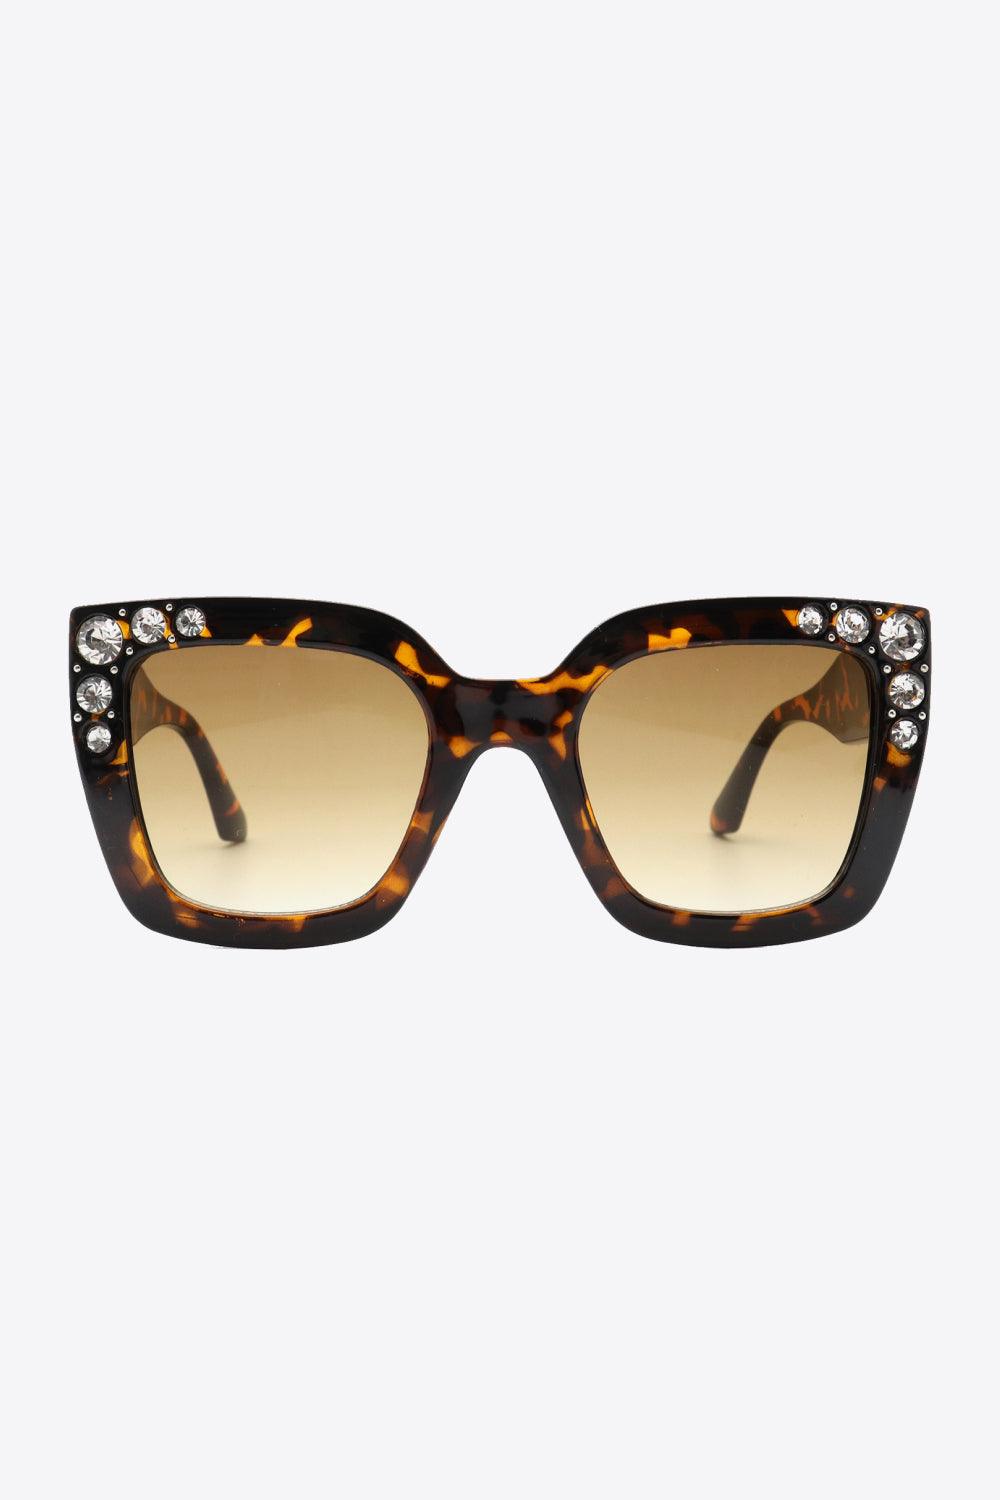 Inlaid Rhinestone Polycarbonate Sunglasses - Olive Ave